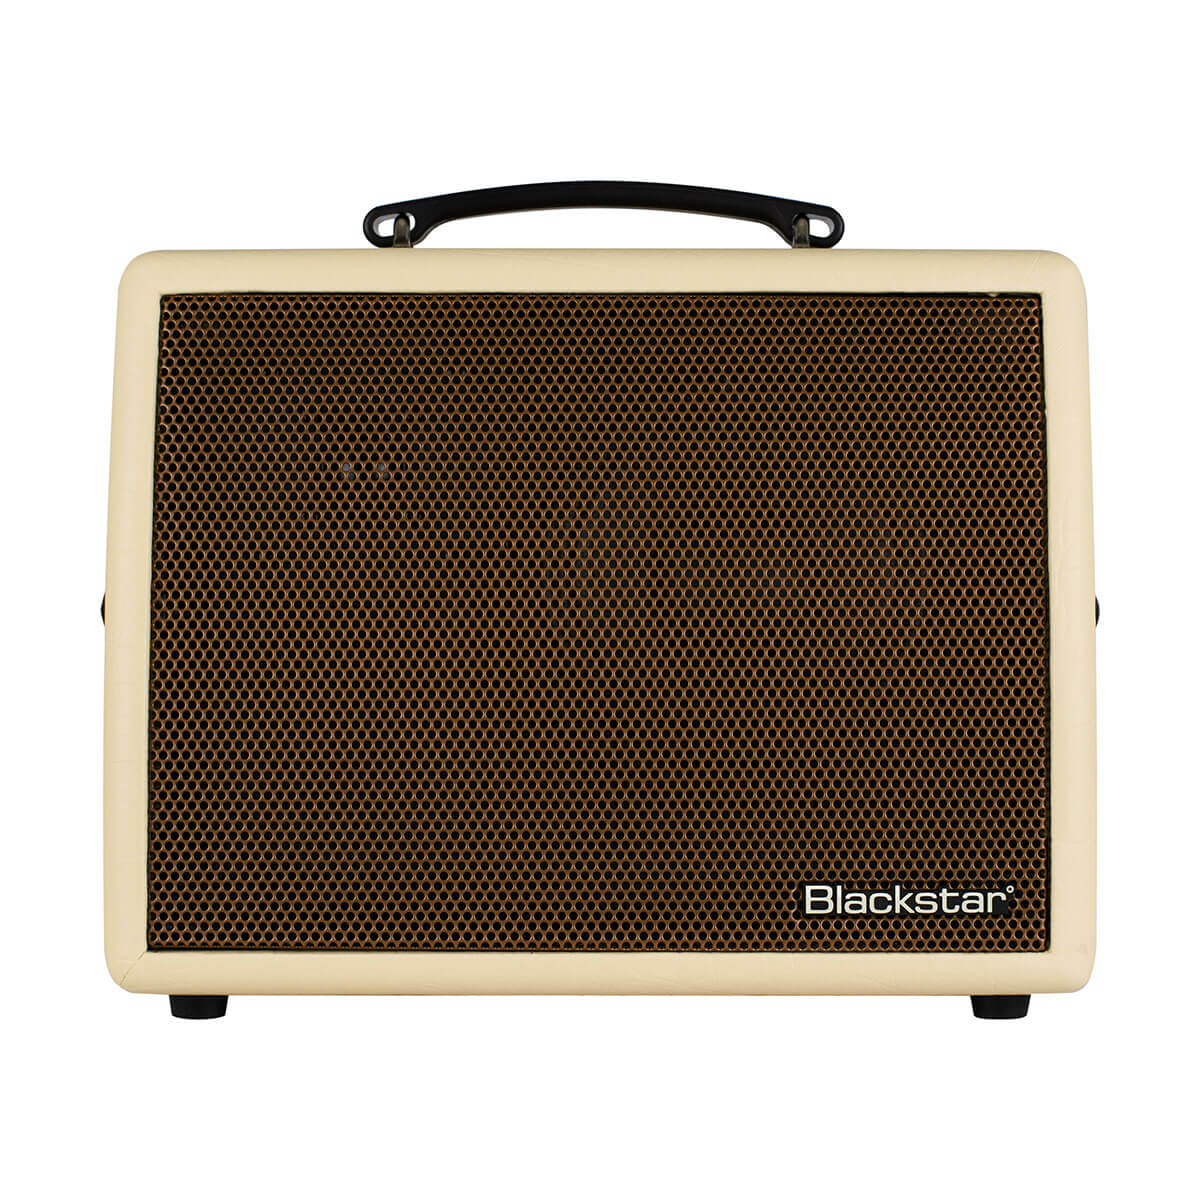 Blackstar Sonnet 60 watt Acoustic Amp - Blonde, View 1